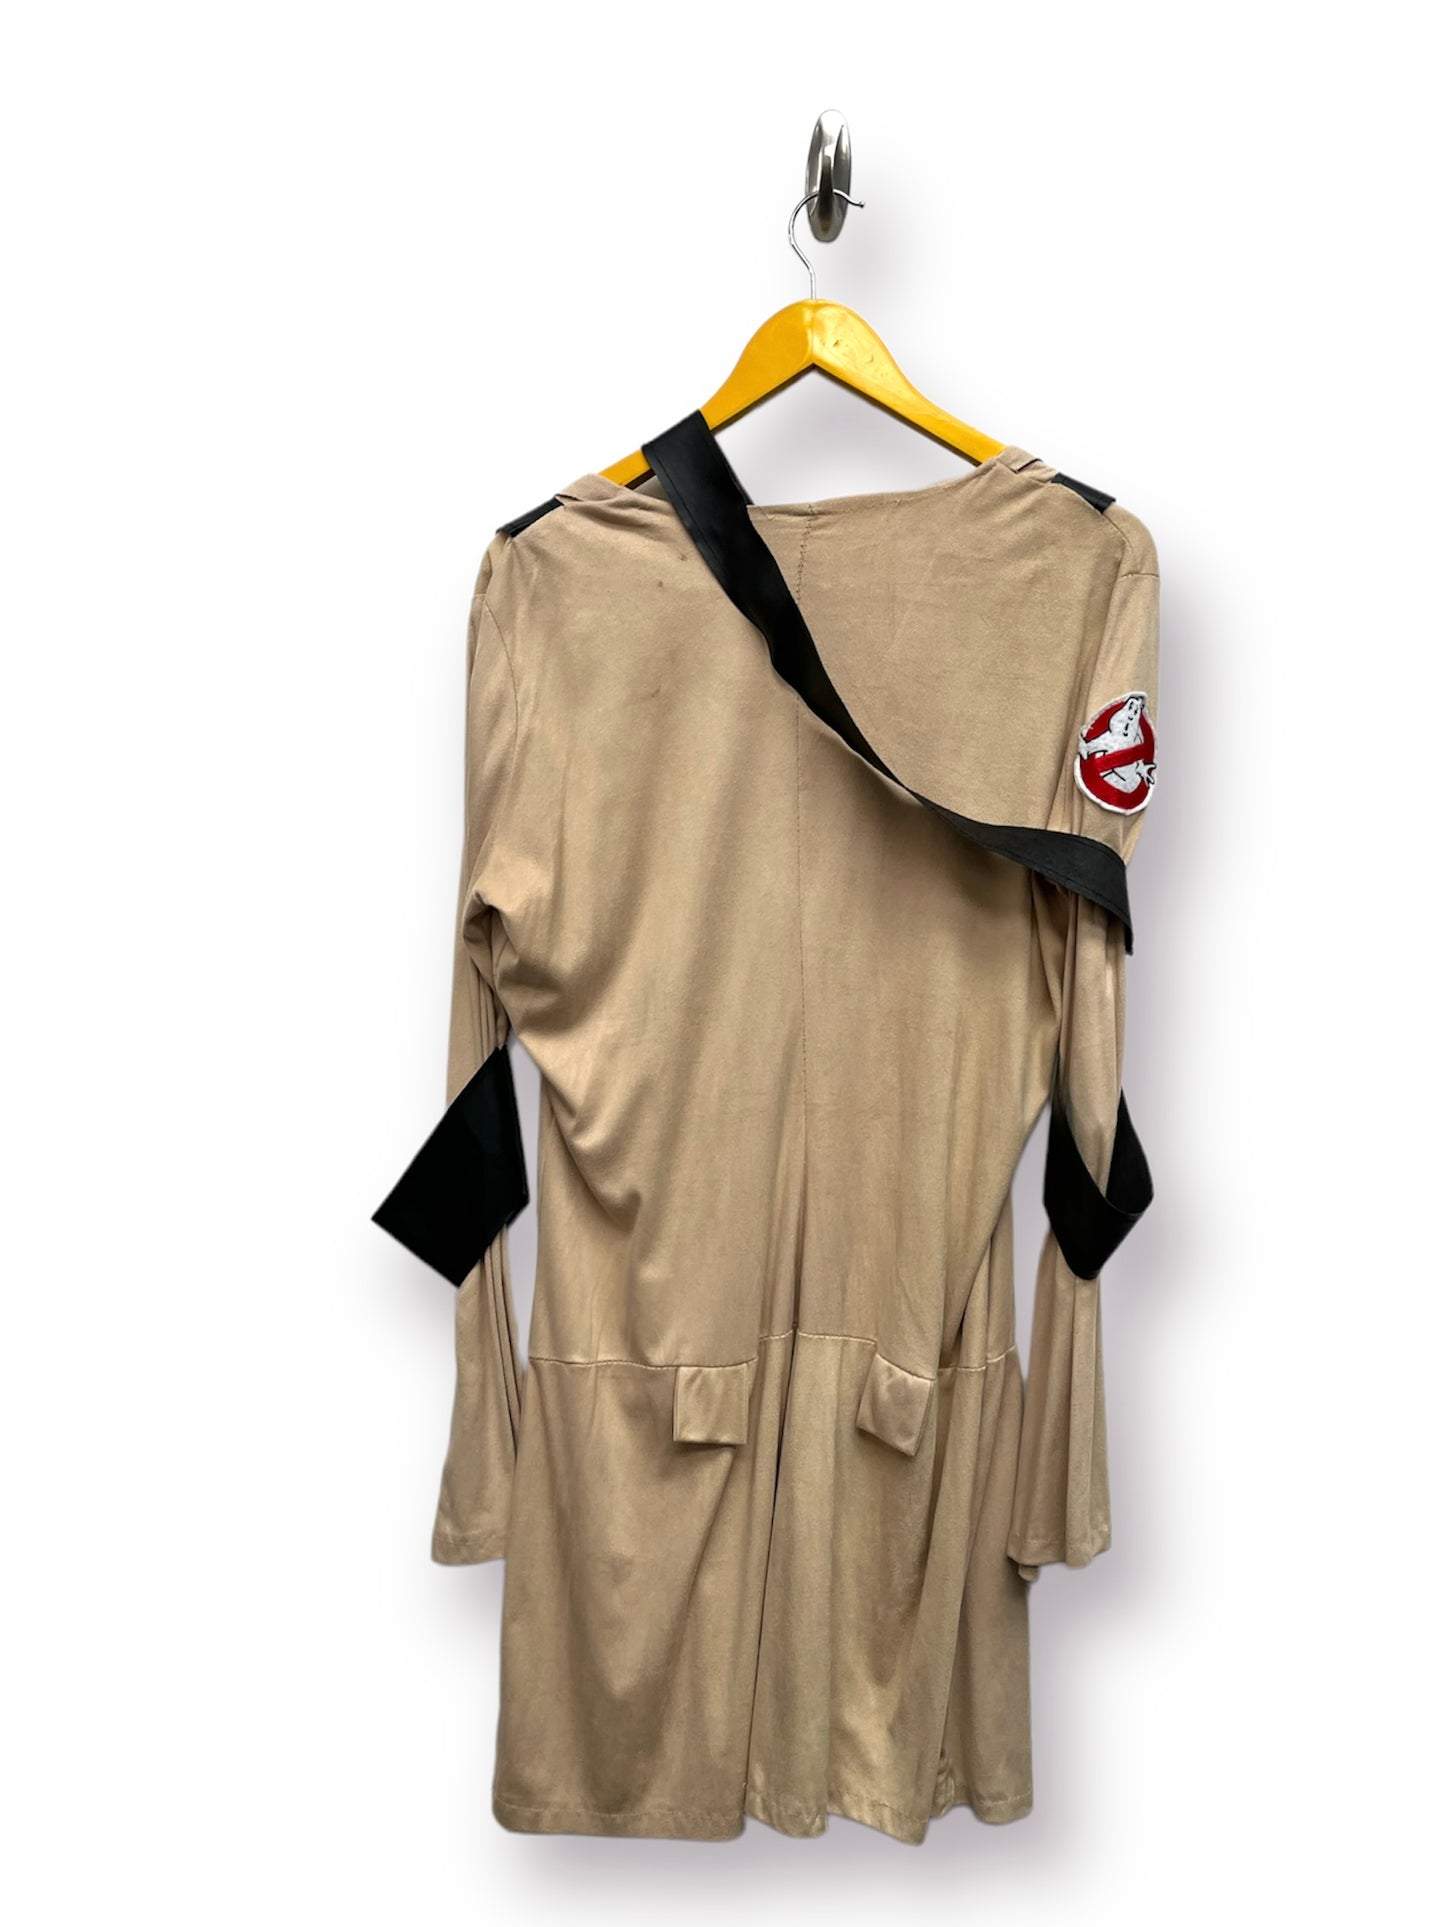 Ladies Ghostbusters Costume Halloween - Ex Hire Fancy dress